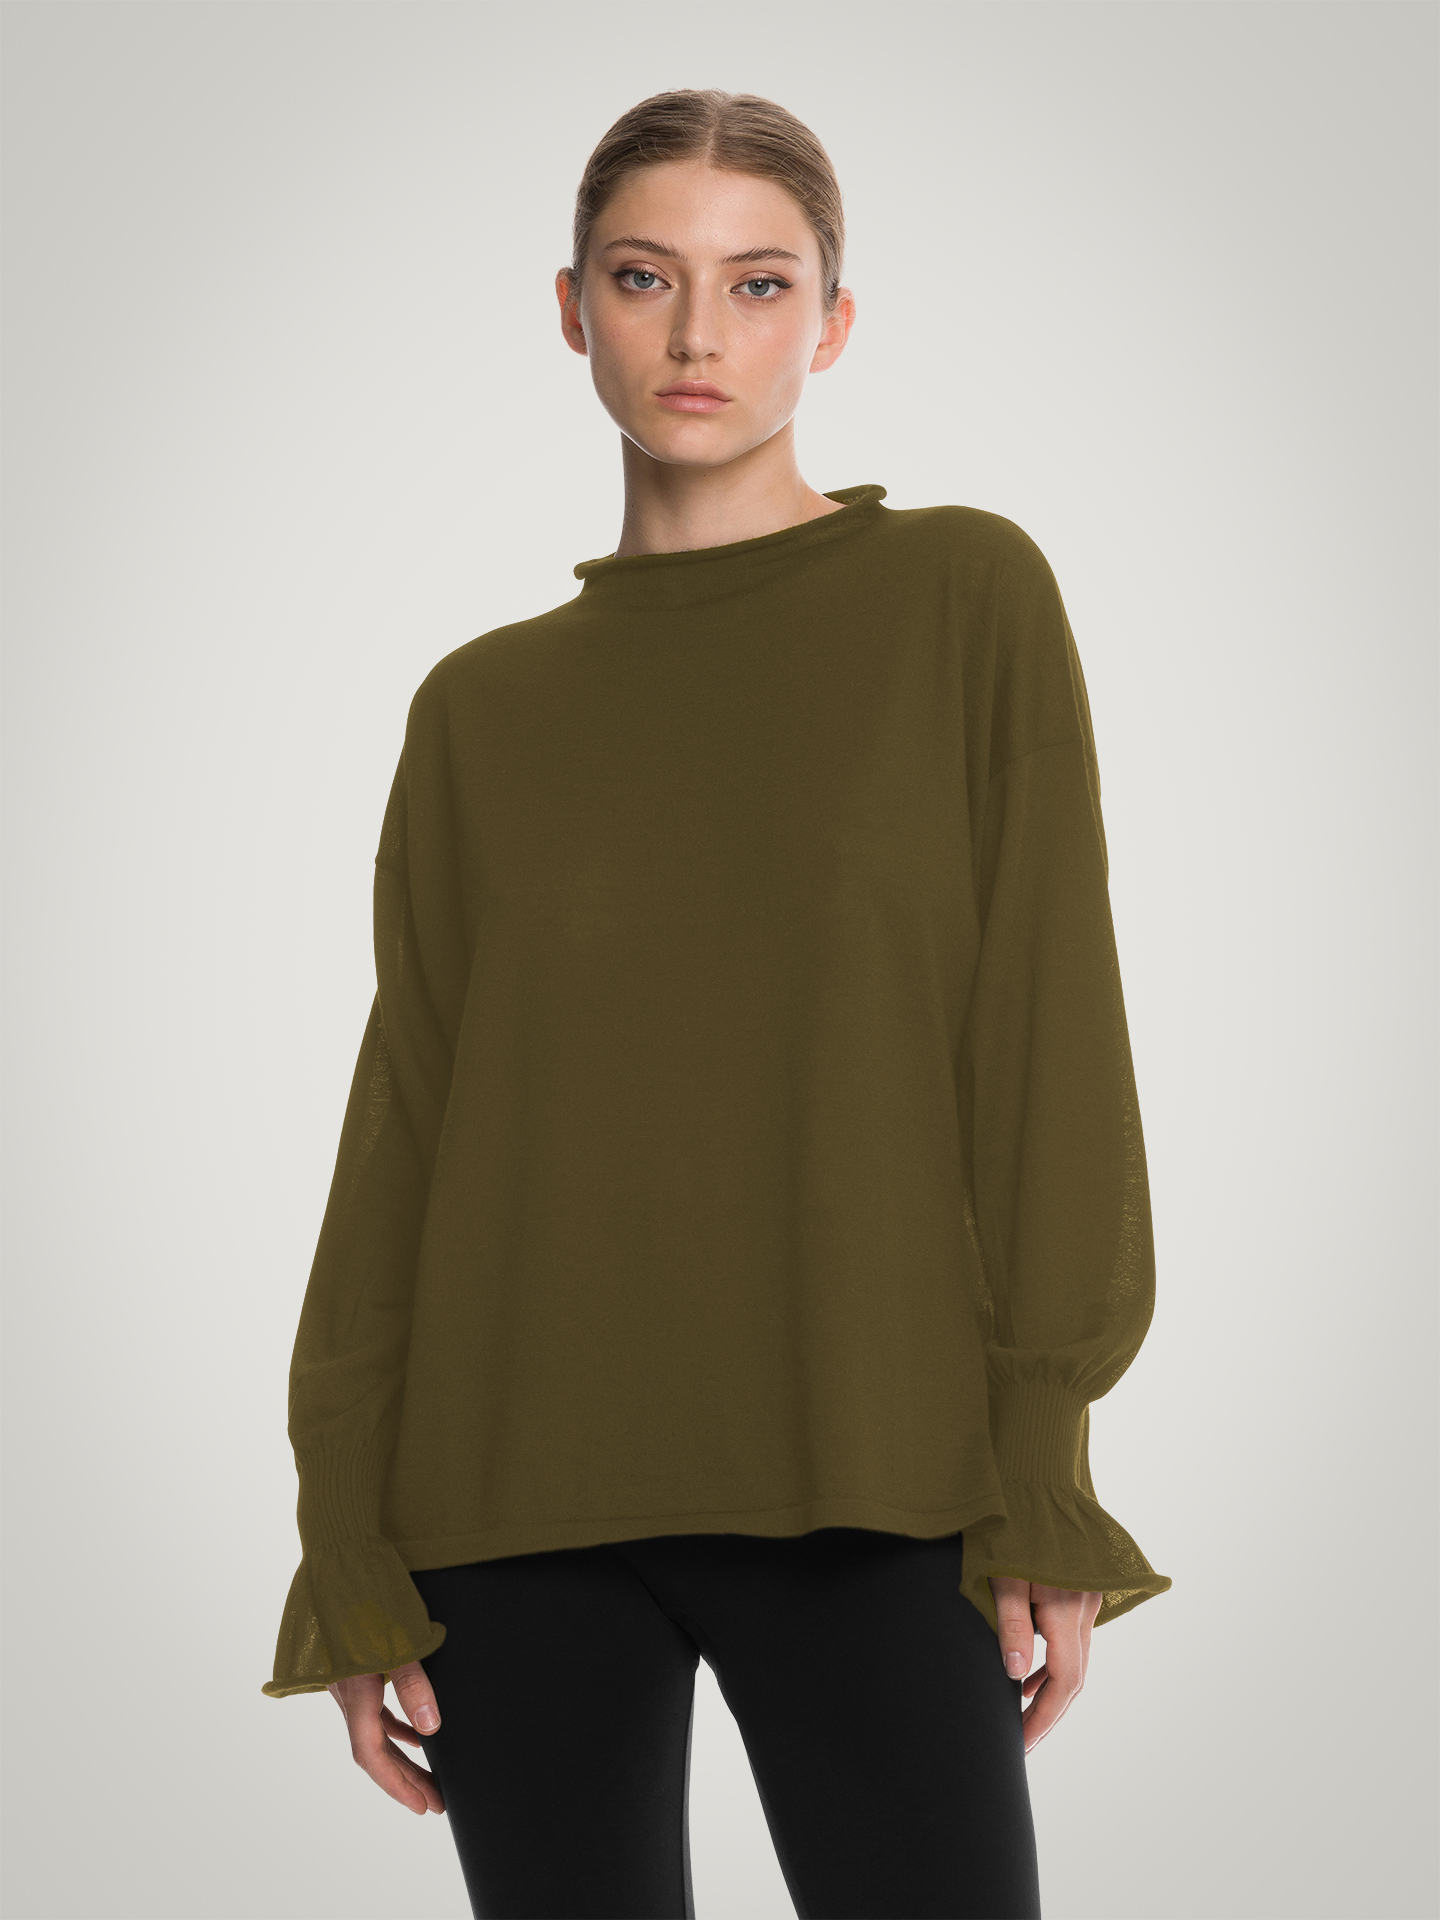 Wolford - Cashmere Loose Top Long Sleeve, Frau, earth green, Größe: M günstig online kaufen